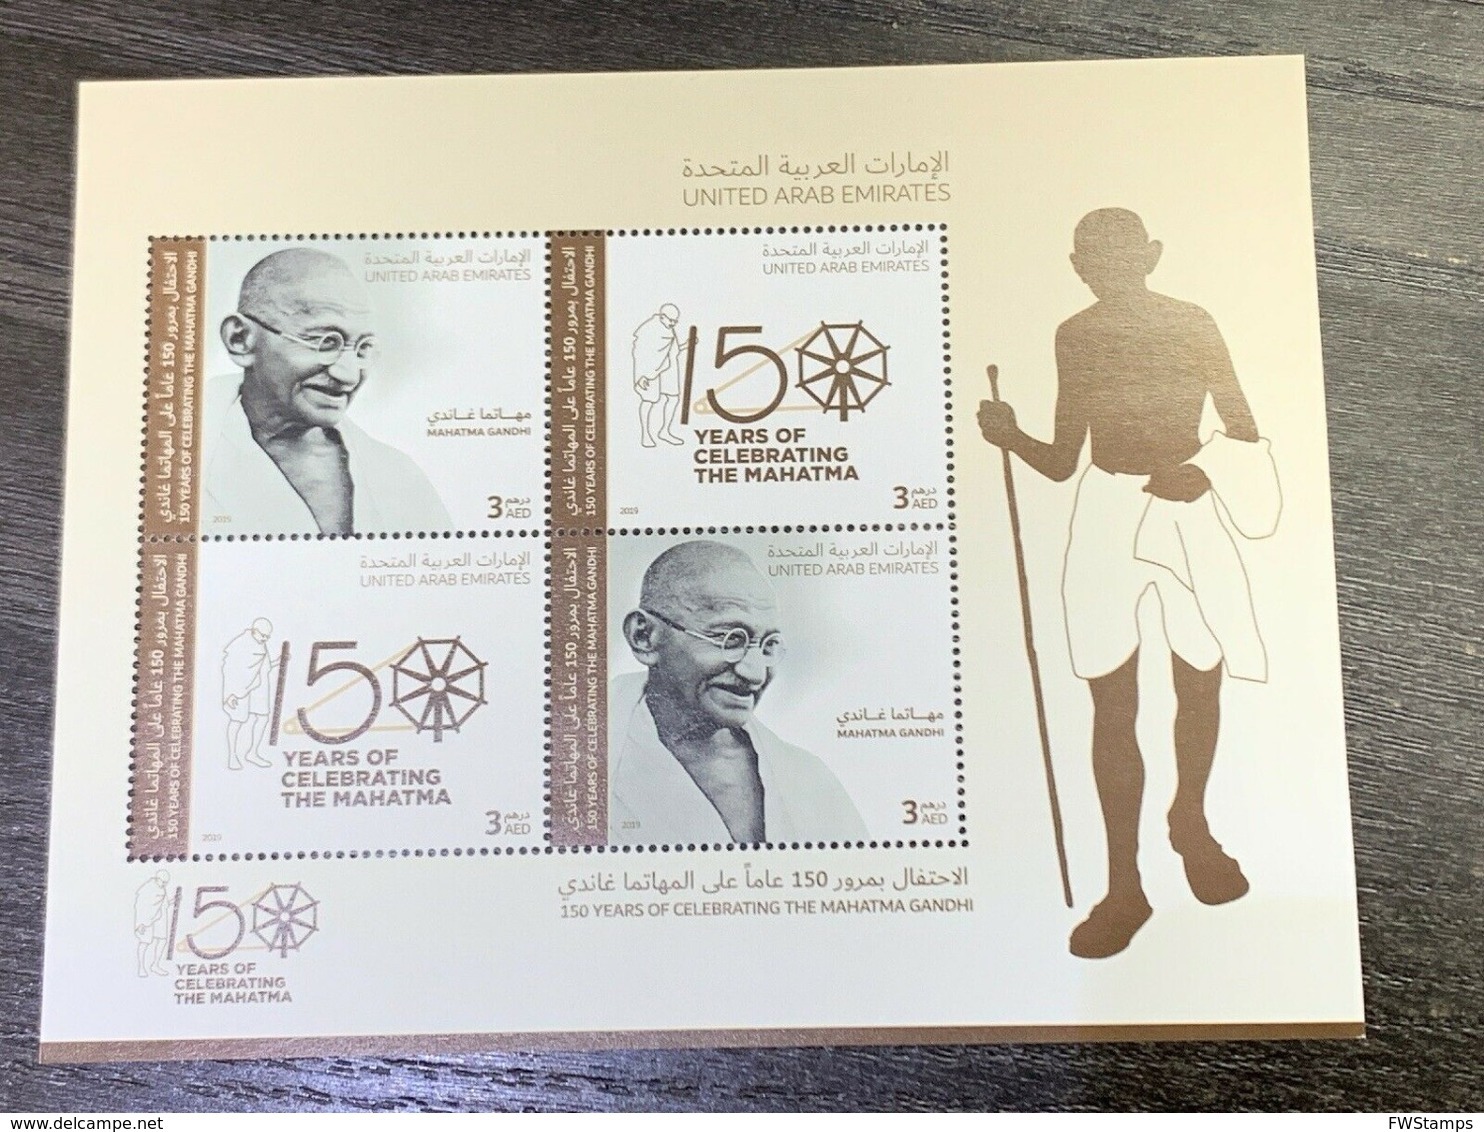 UAE 2019 Gandhi Stamp Sheet MNH Ultra Rare And Sold Out - United Arab Emirates (General)